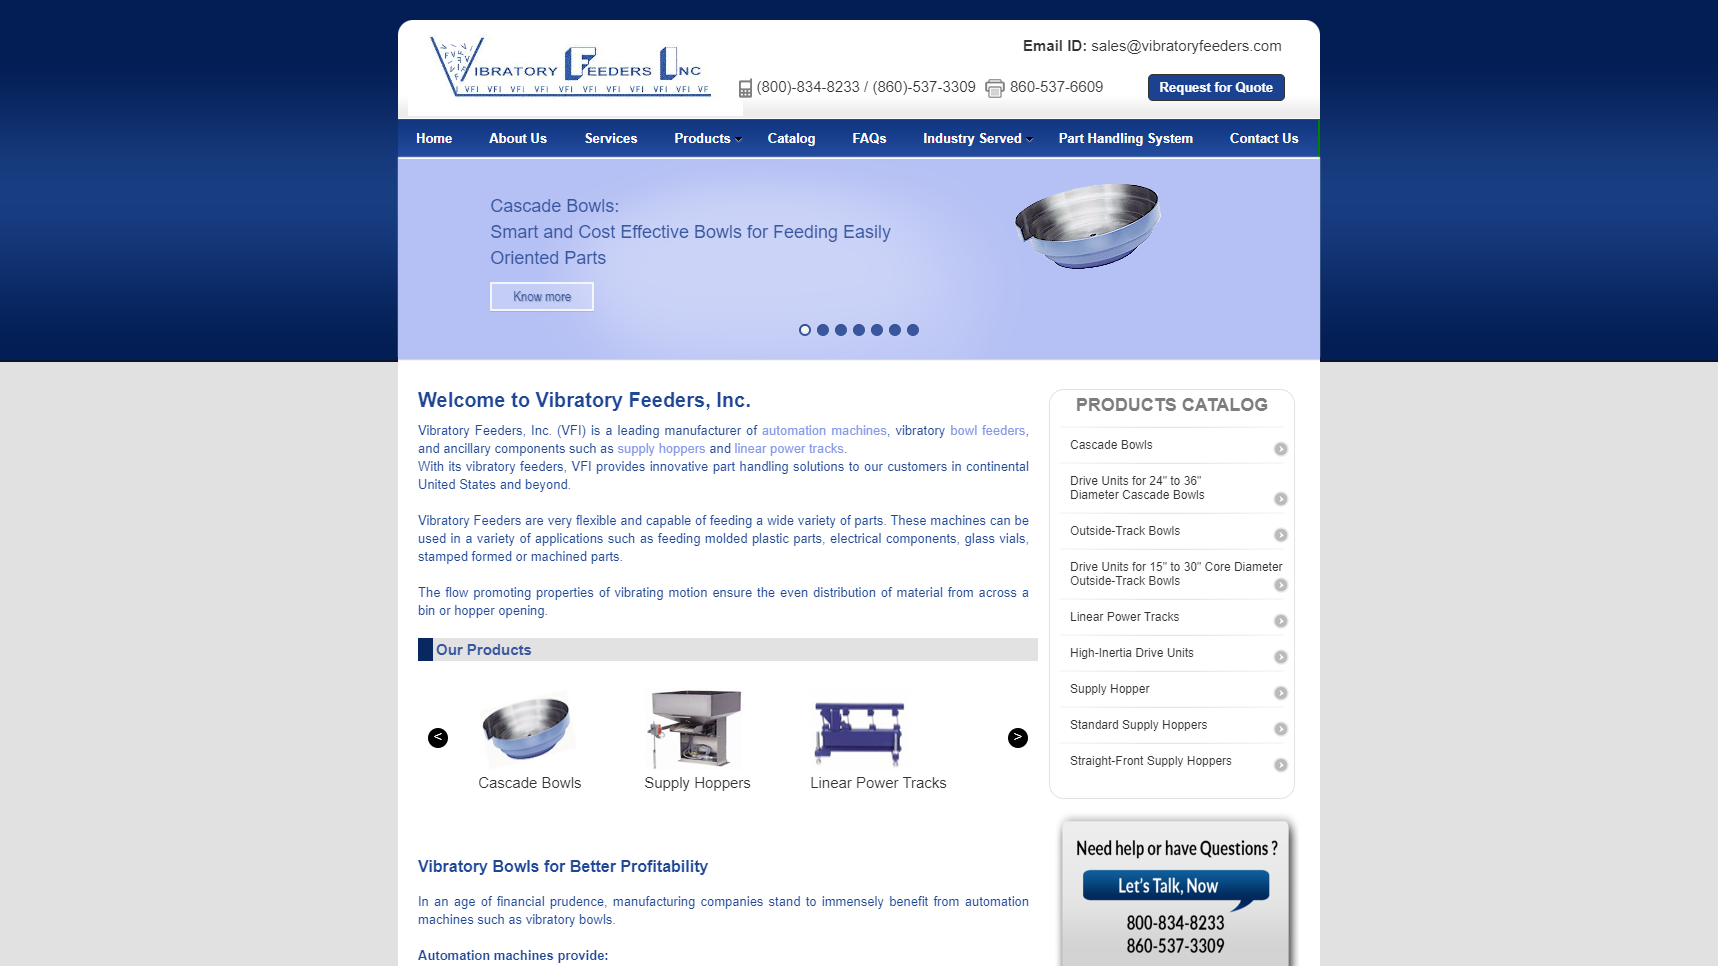 Vibratory Feeders, Inc. - Bowl Feeder Manufacturer